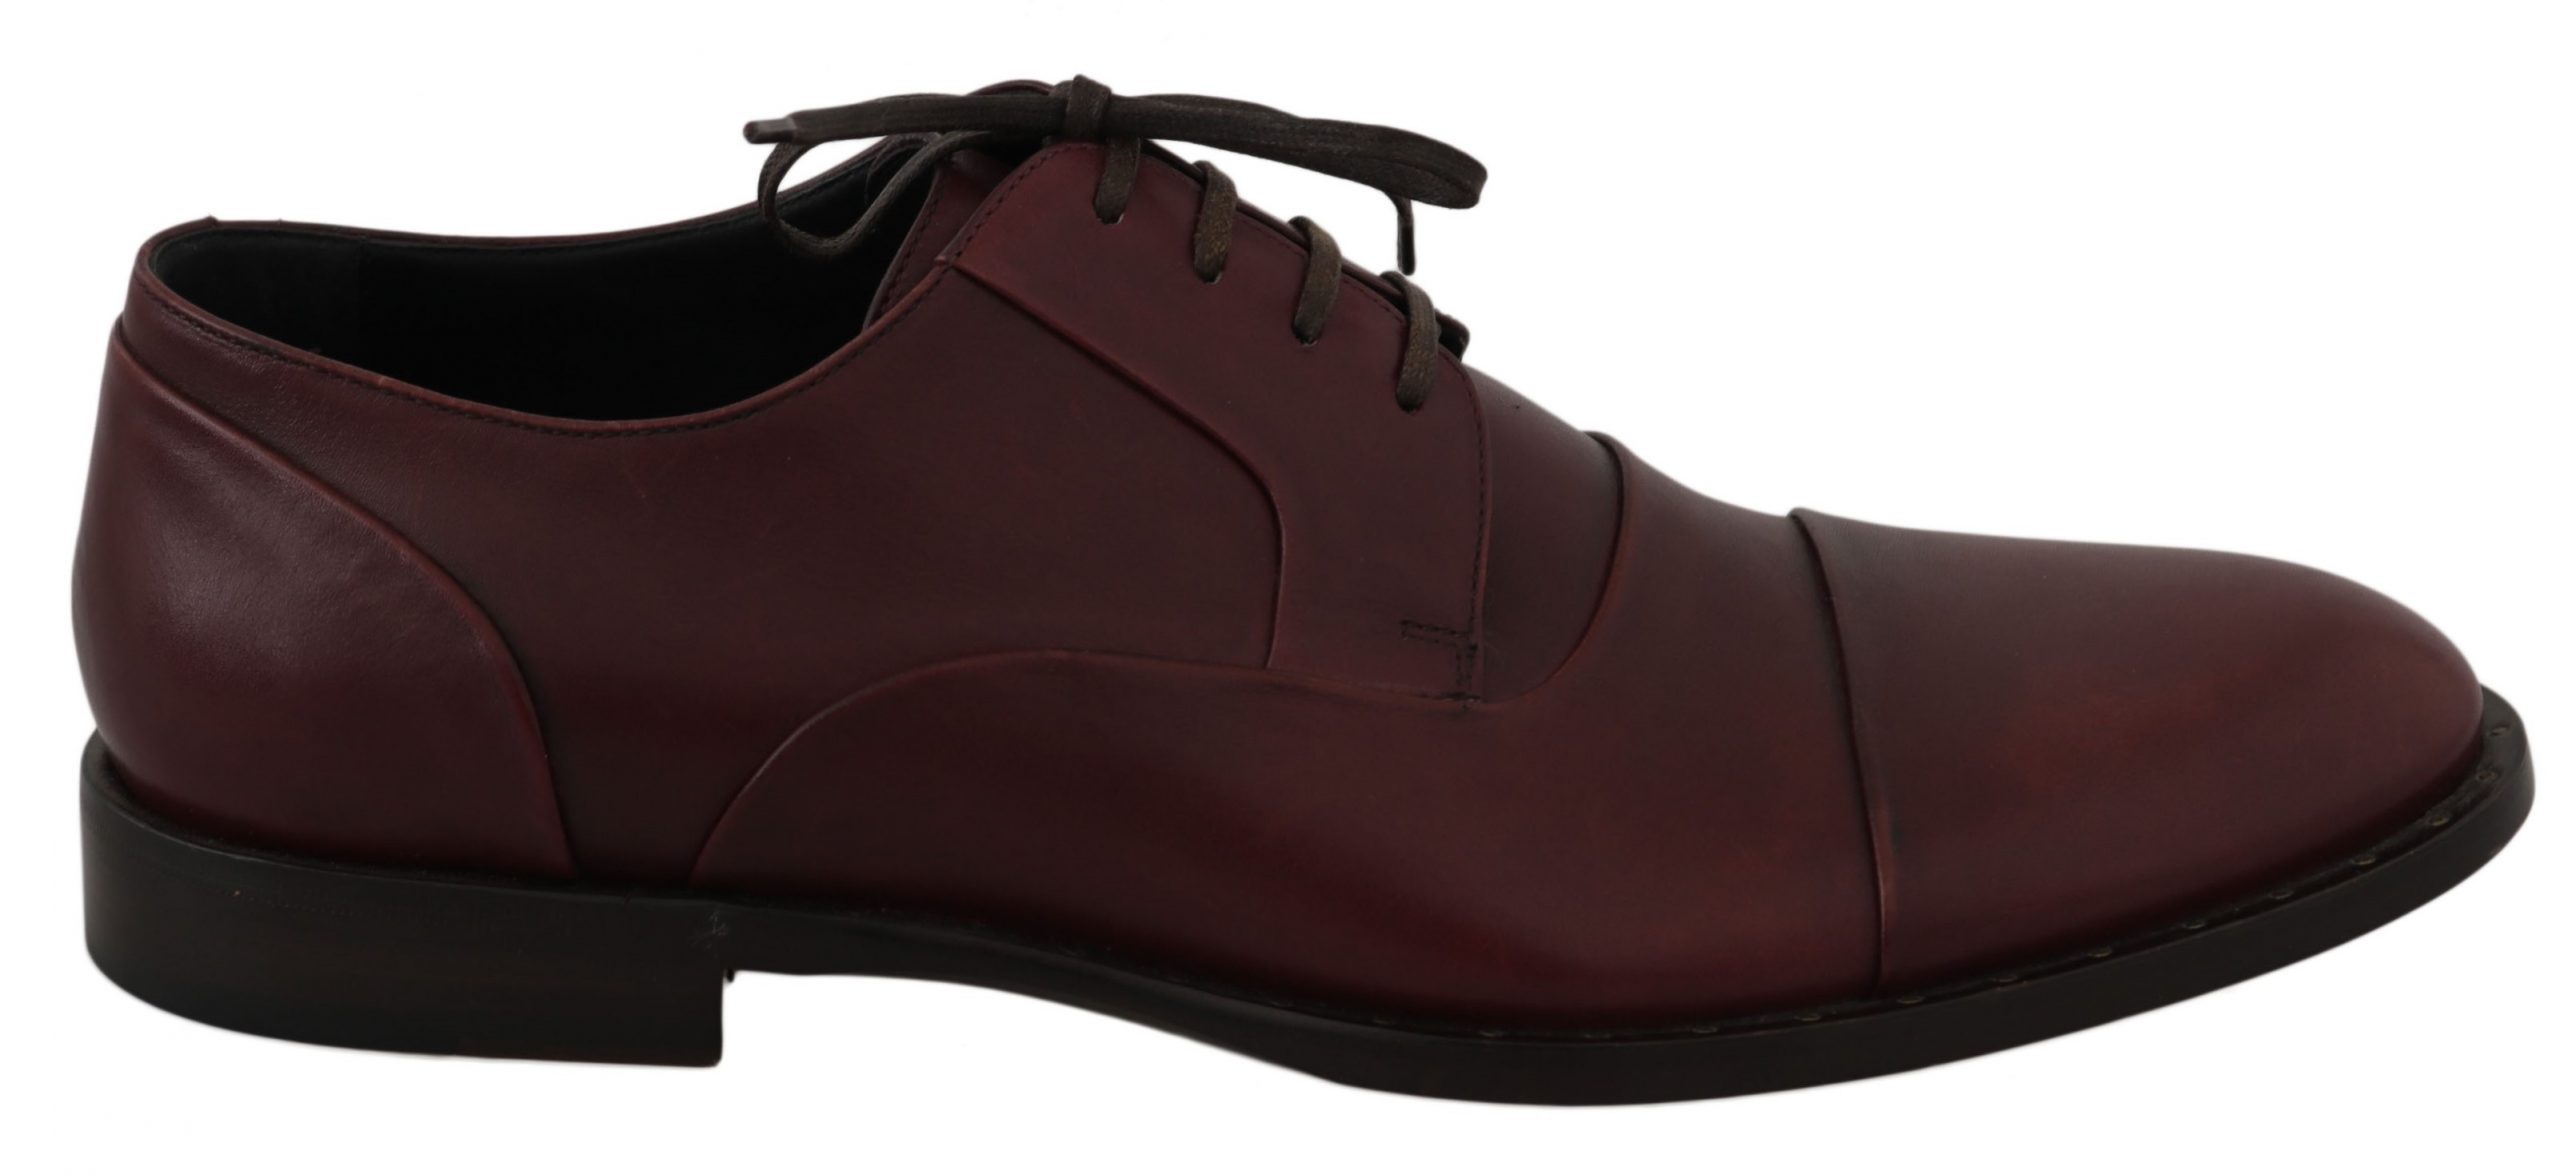 Dolce & Gabbana Men's Leather Formal Oxford Shoe Bordeaux MV2318 - EU39/US6